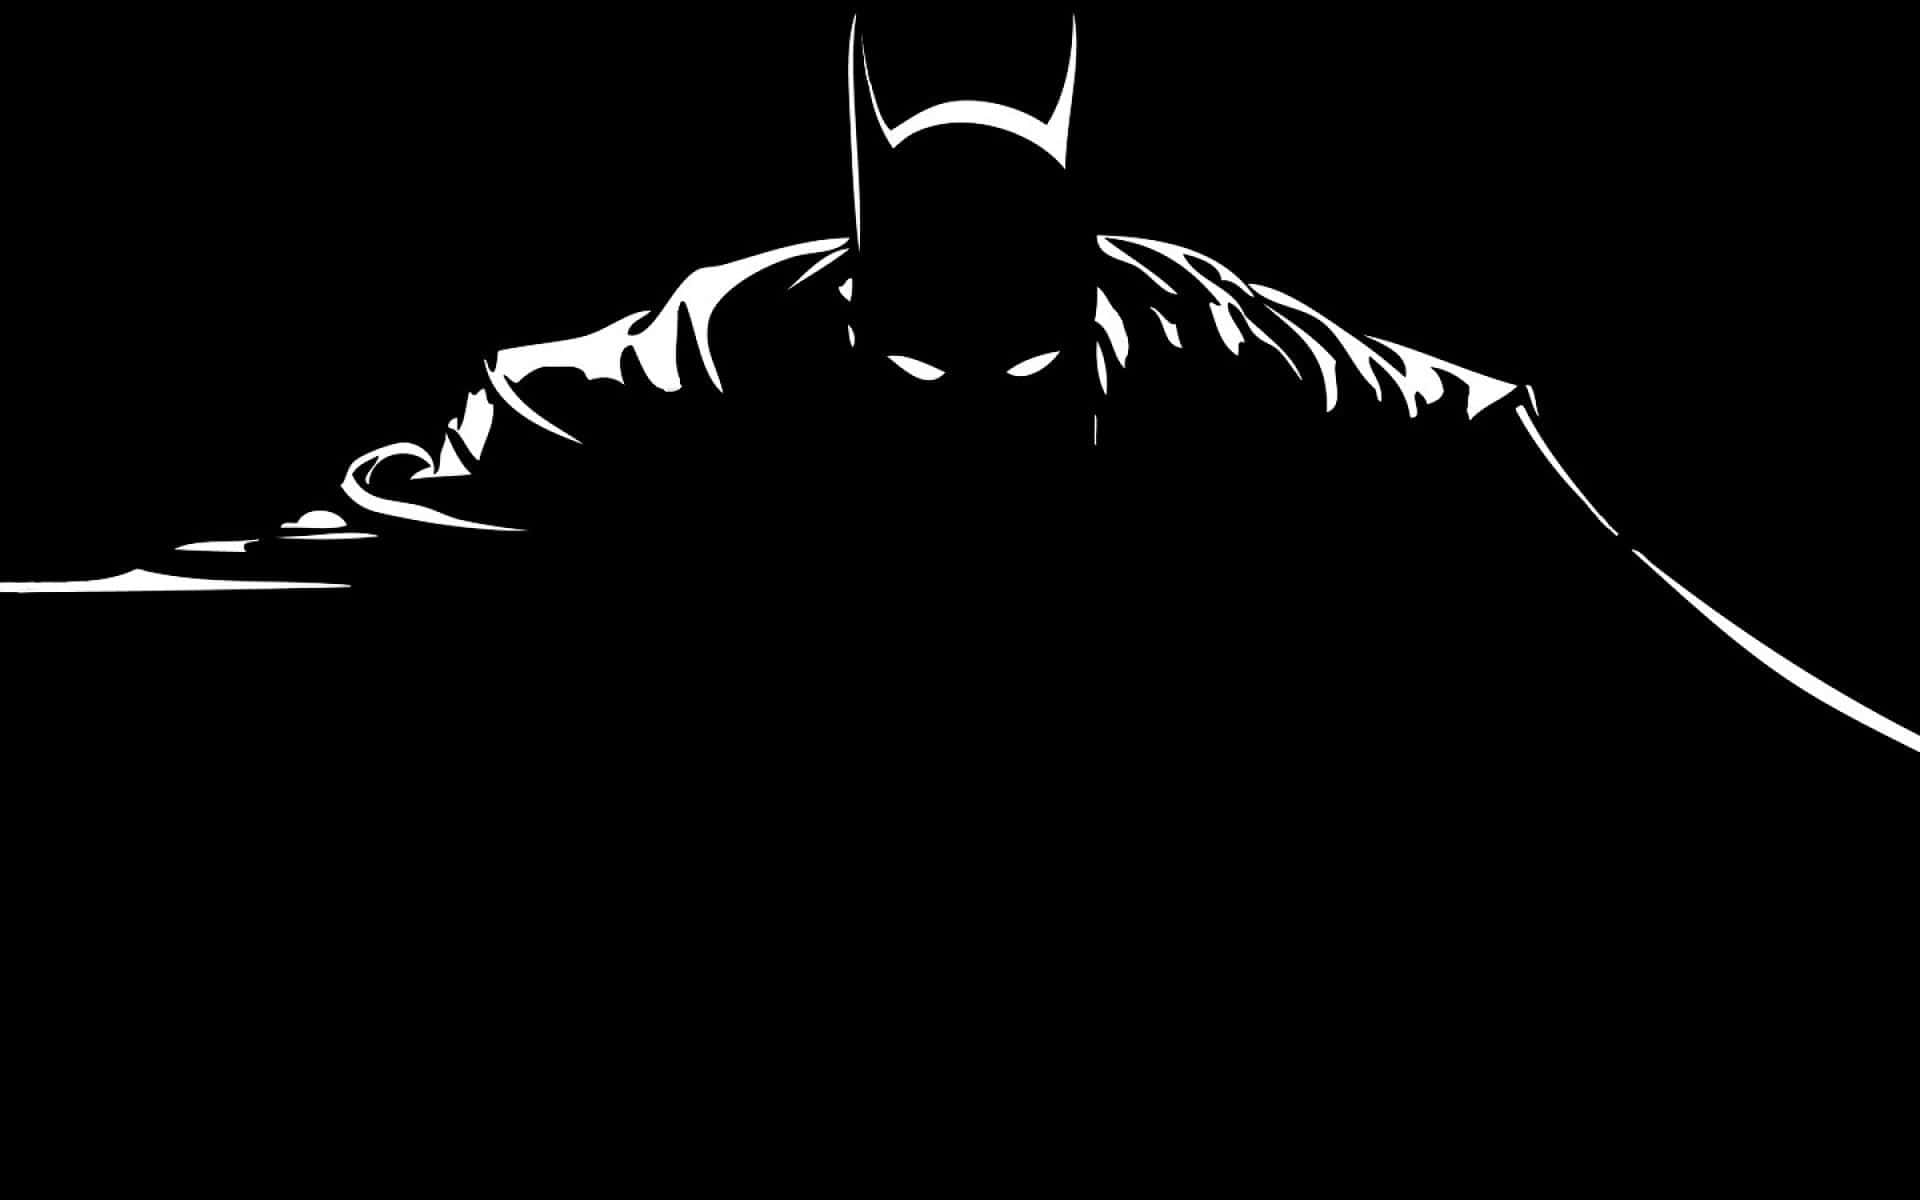 Dark Batman Aesthetic In Silhouette Wallpaper